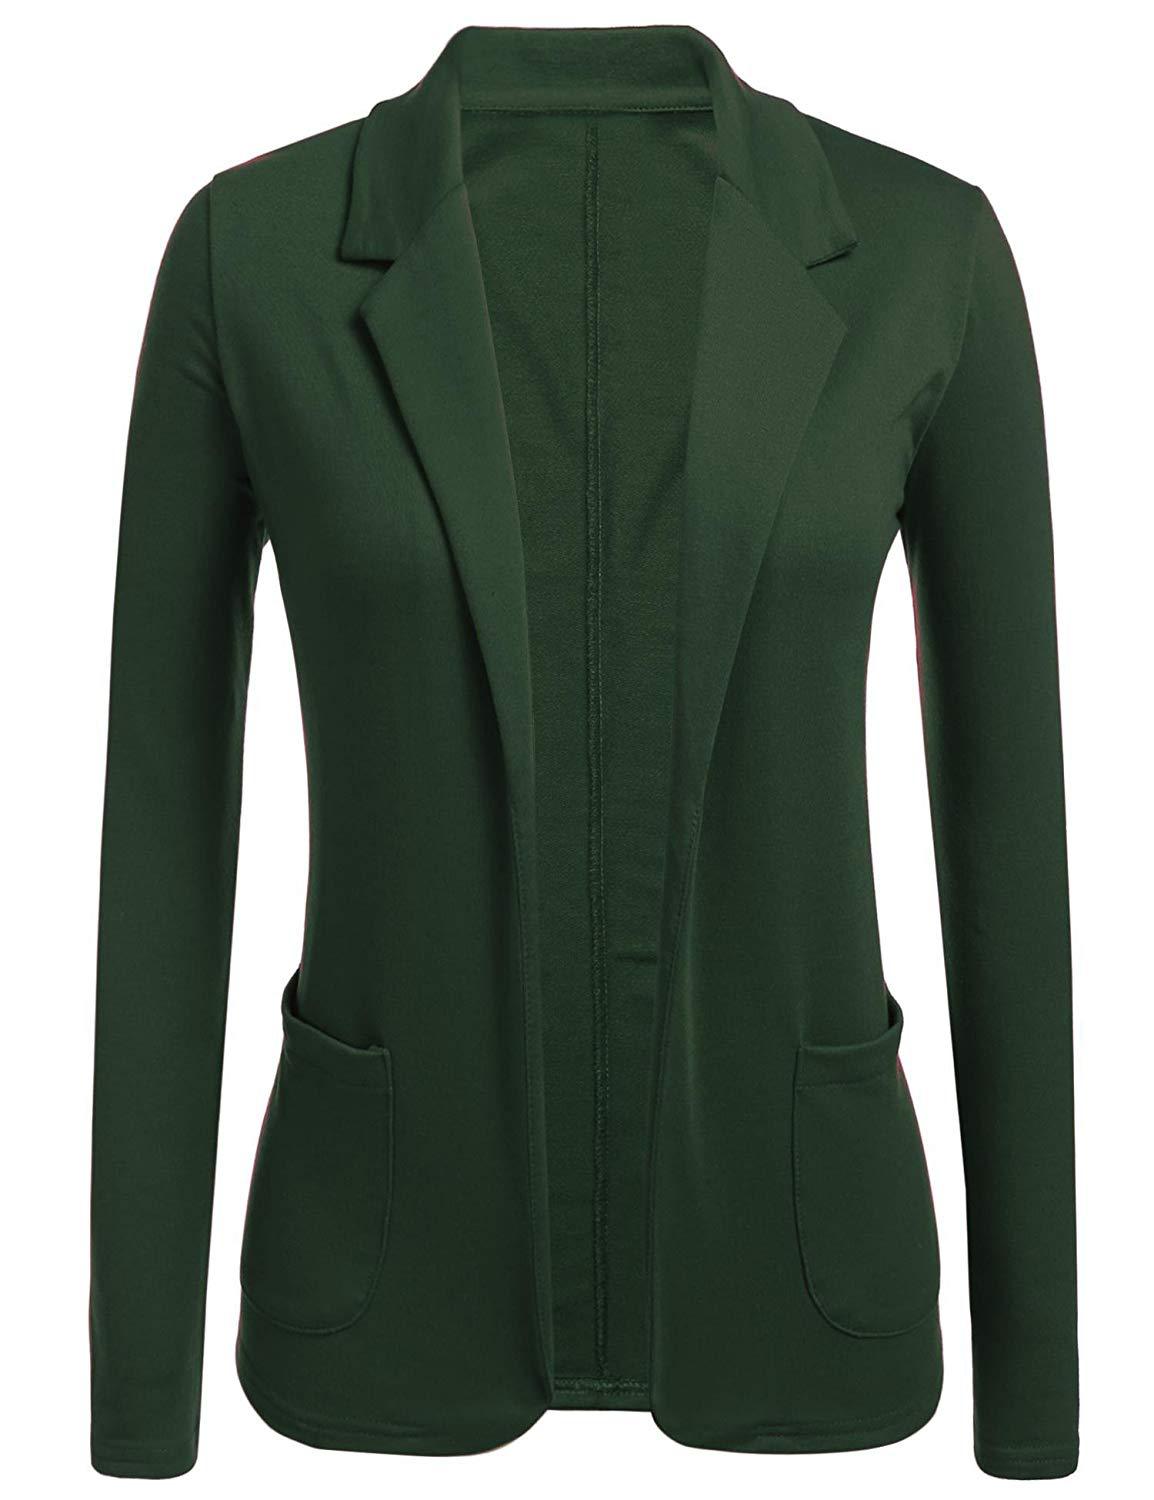  Women Blazer Coat Autumn Casual Long Sleeve Work Office Business Lady Slim Suit Jacket green